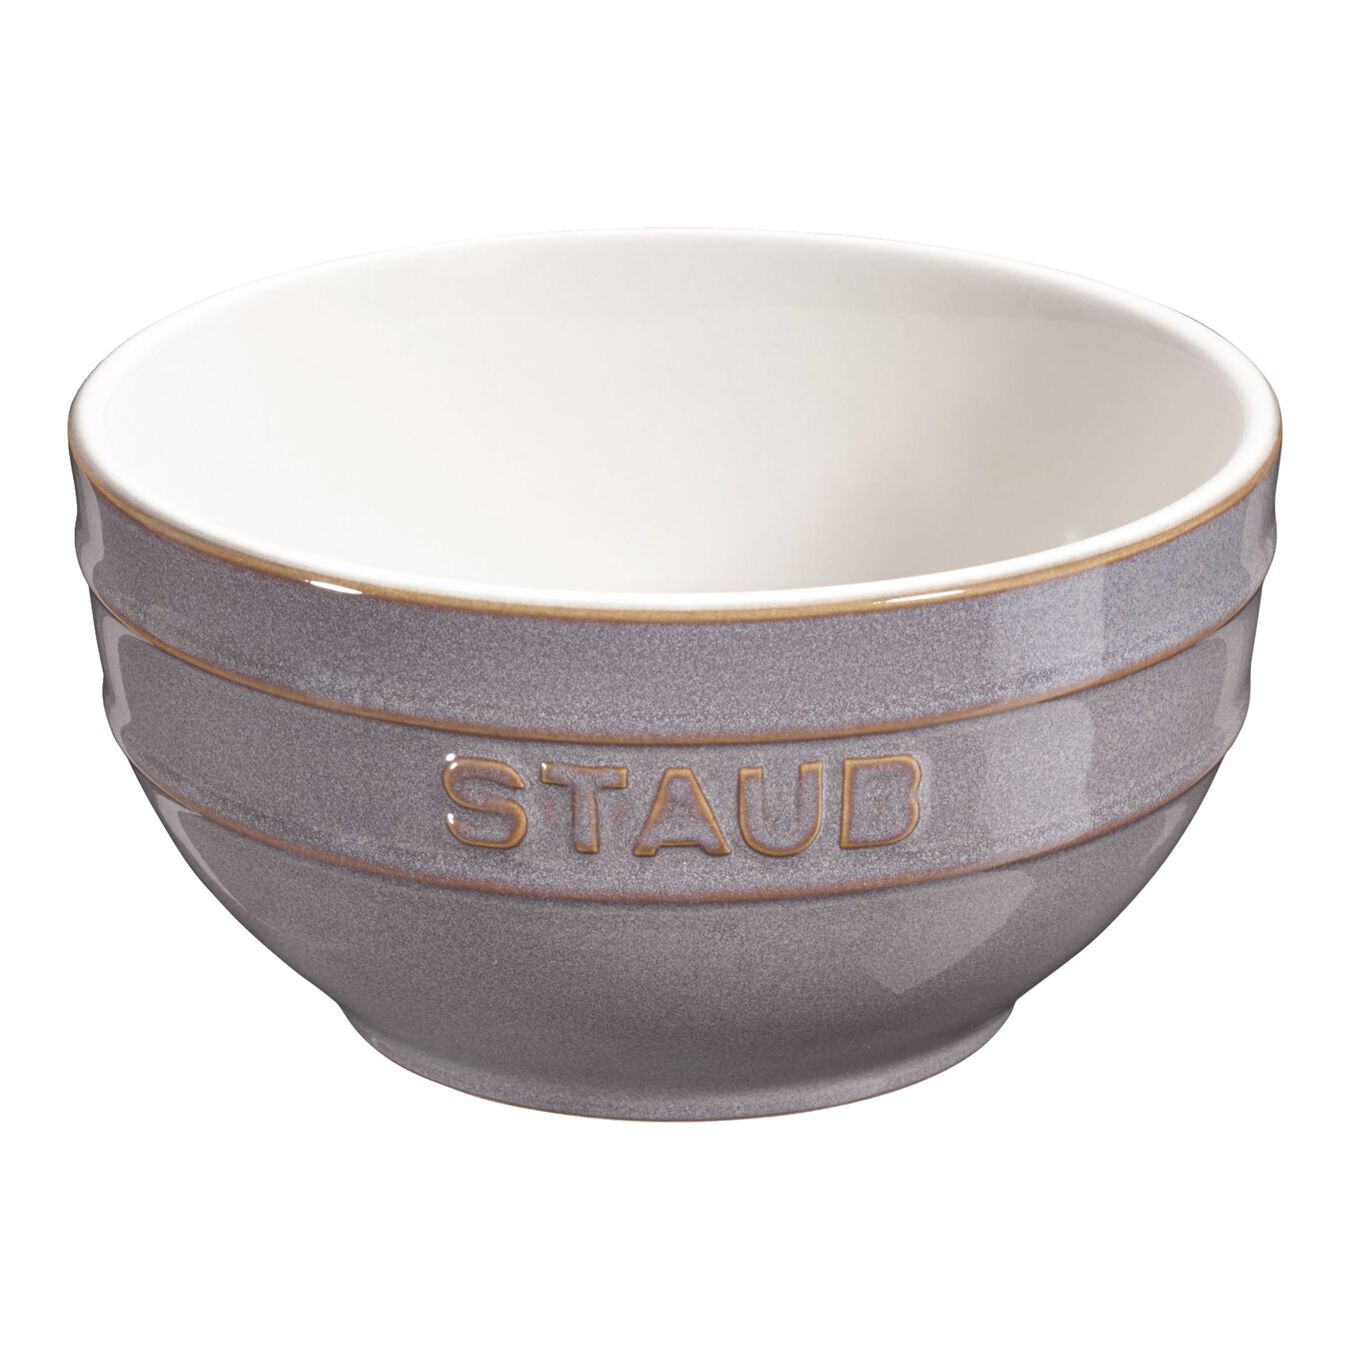 12 cm round Ceramic Bowl ancient-grey,,large 1